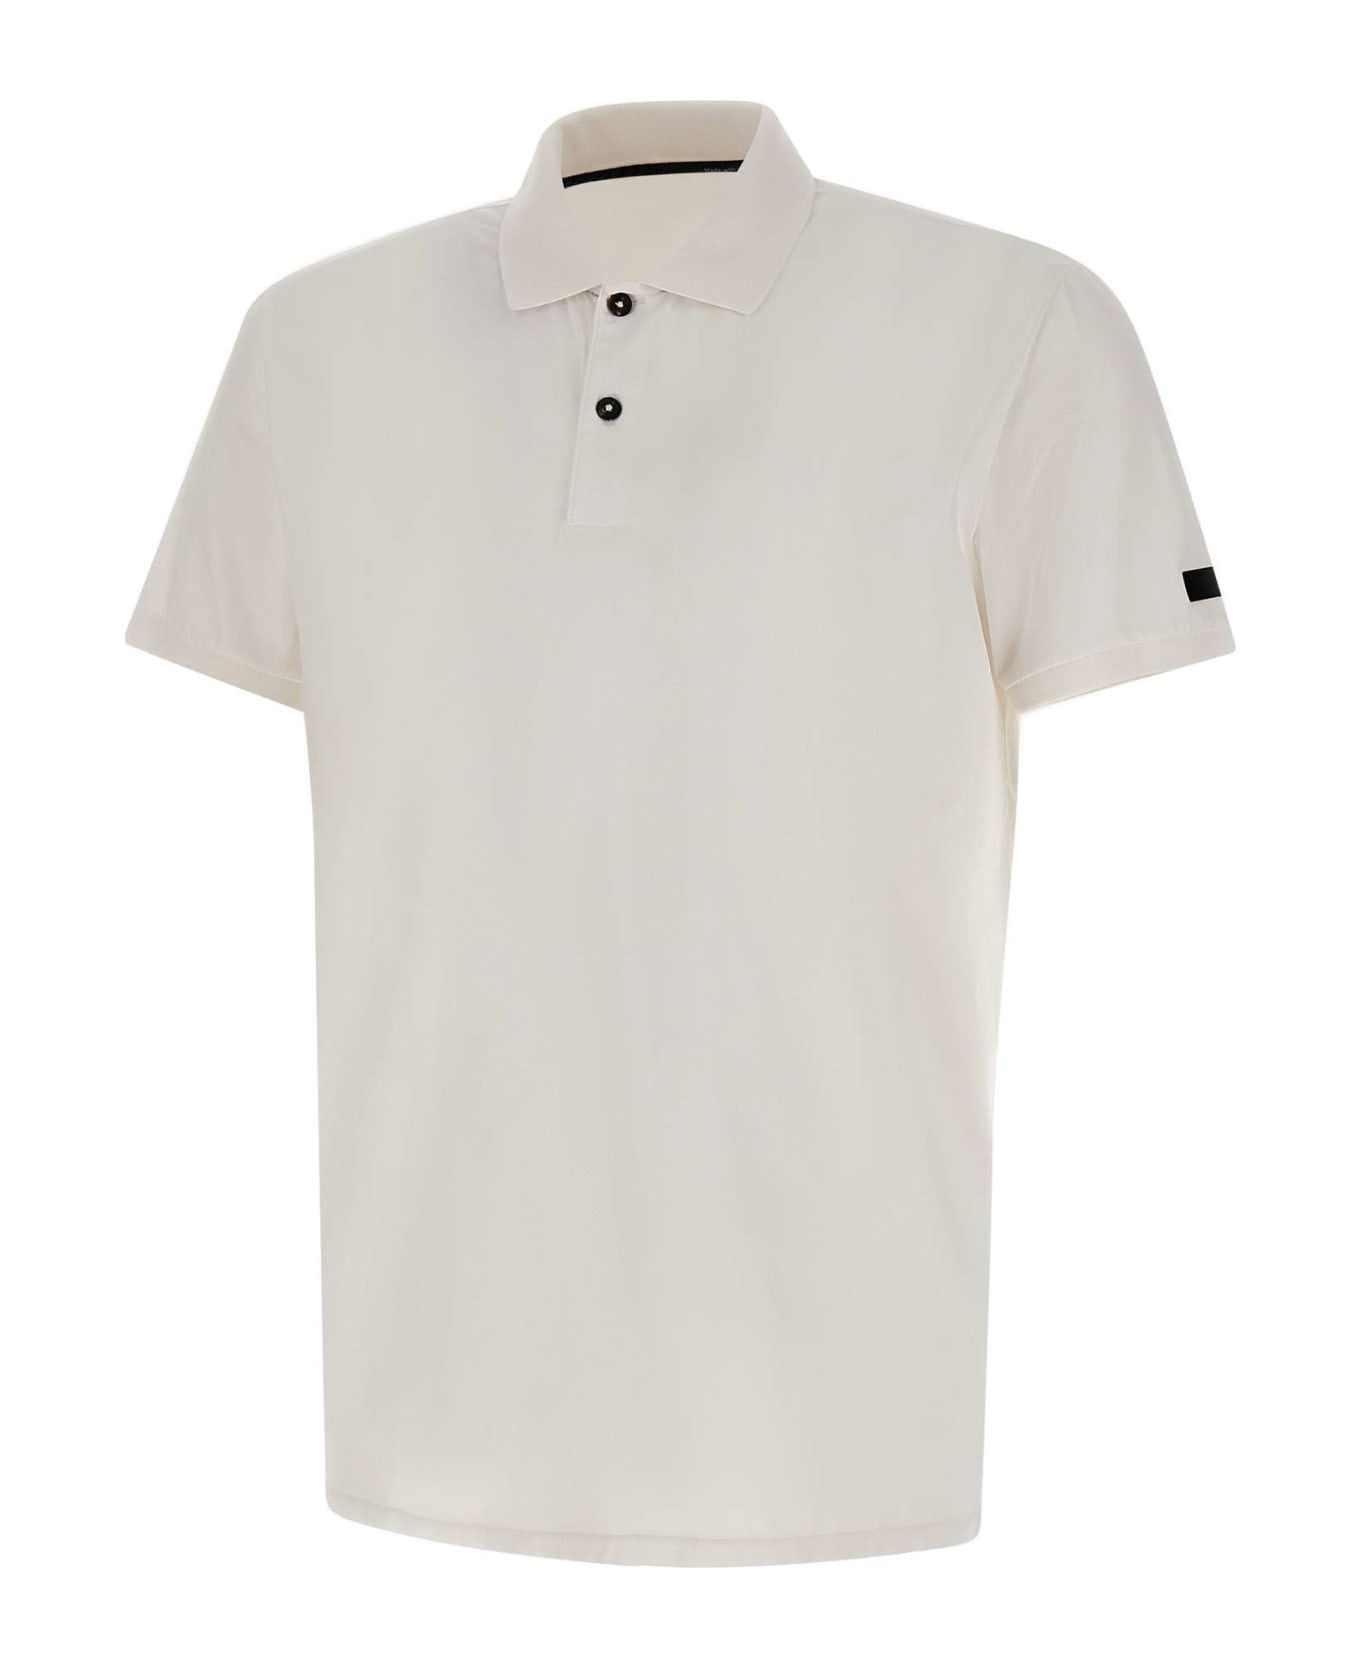 RRD - Roberto Ricci Design "gdy" Oxford Cotton Polo Shirt - WHITE